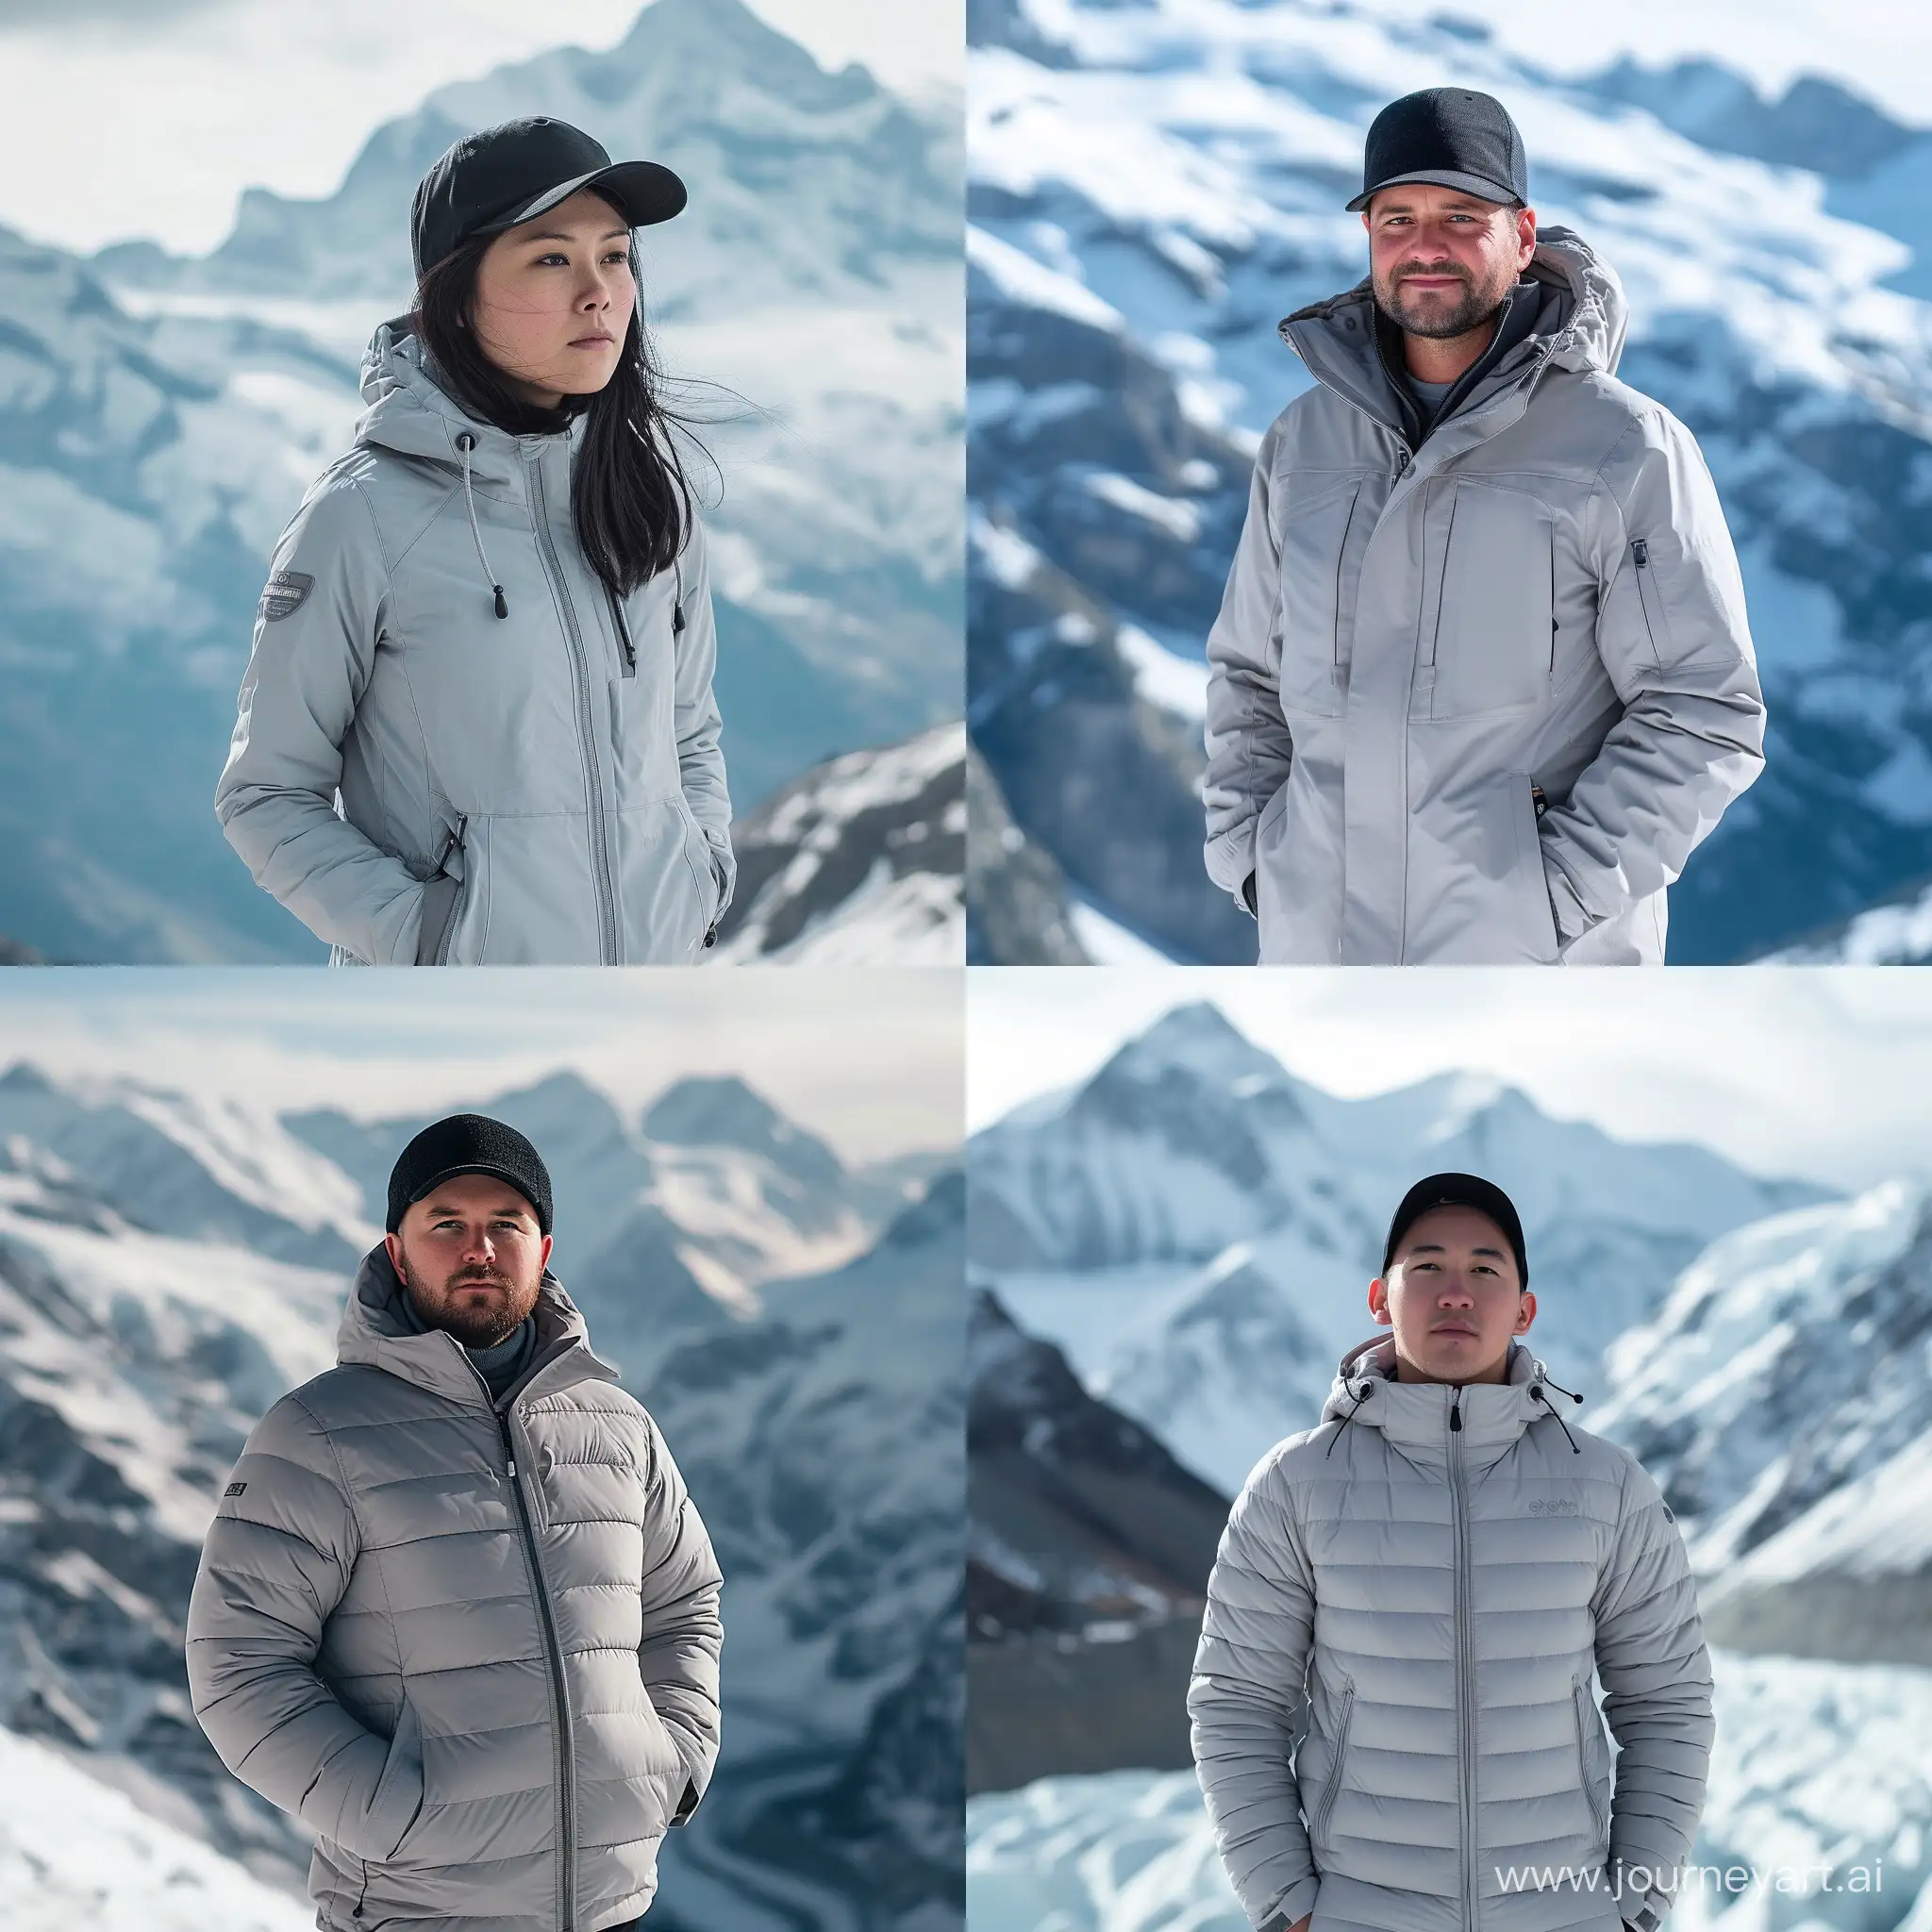 Snowy-Mountain-Fashion-Stylish-Gray-Jacket-and-Black-Cap-Portrait